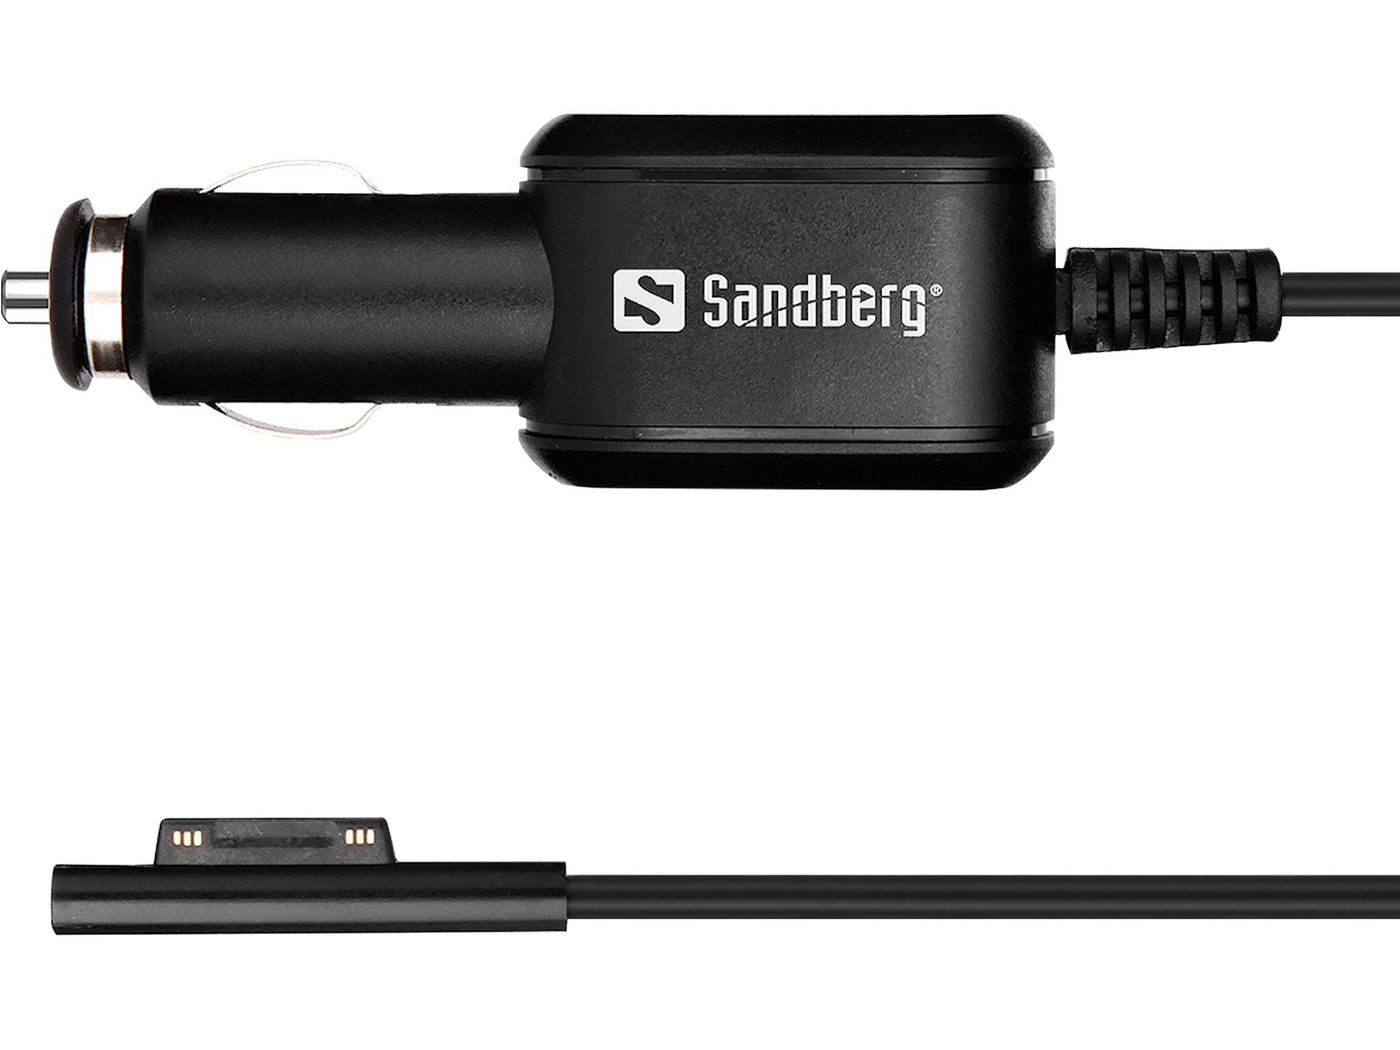 Sandberg 441-00 Car Charger for Surface 